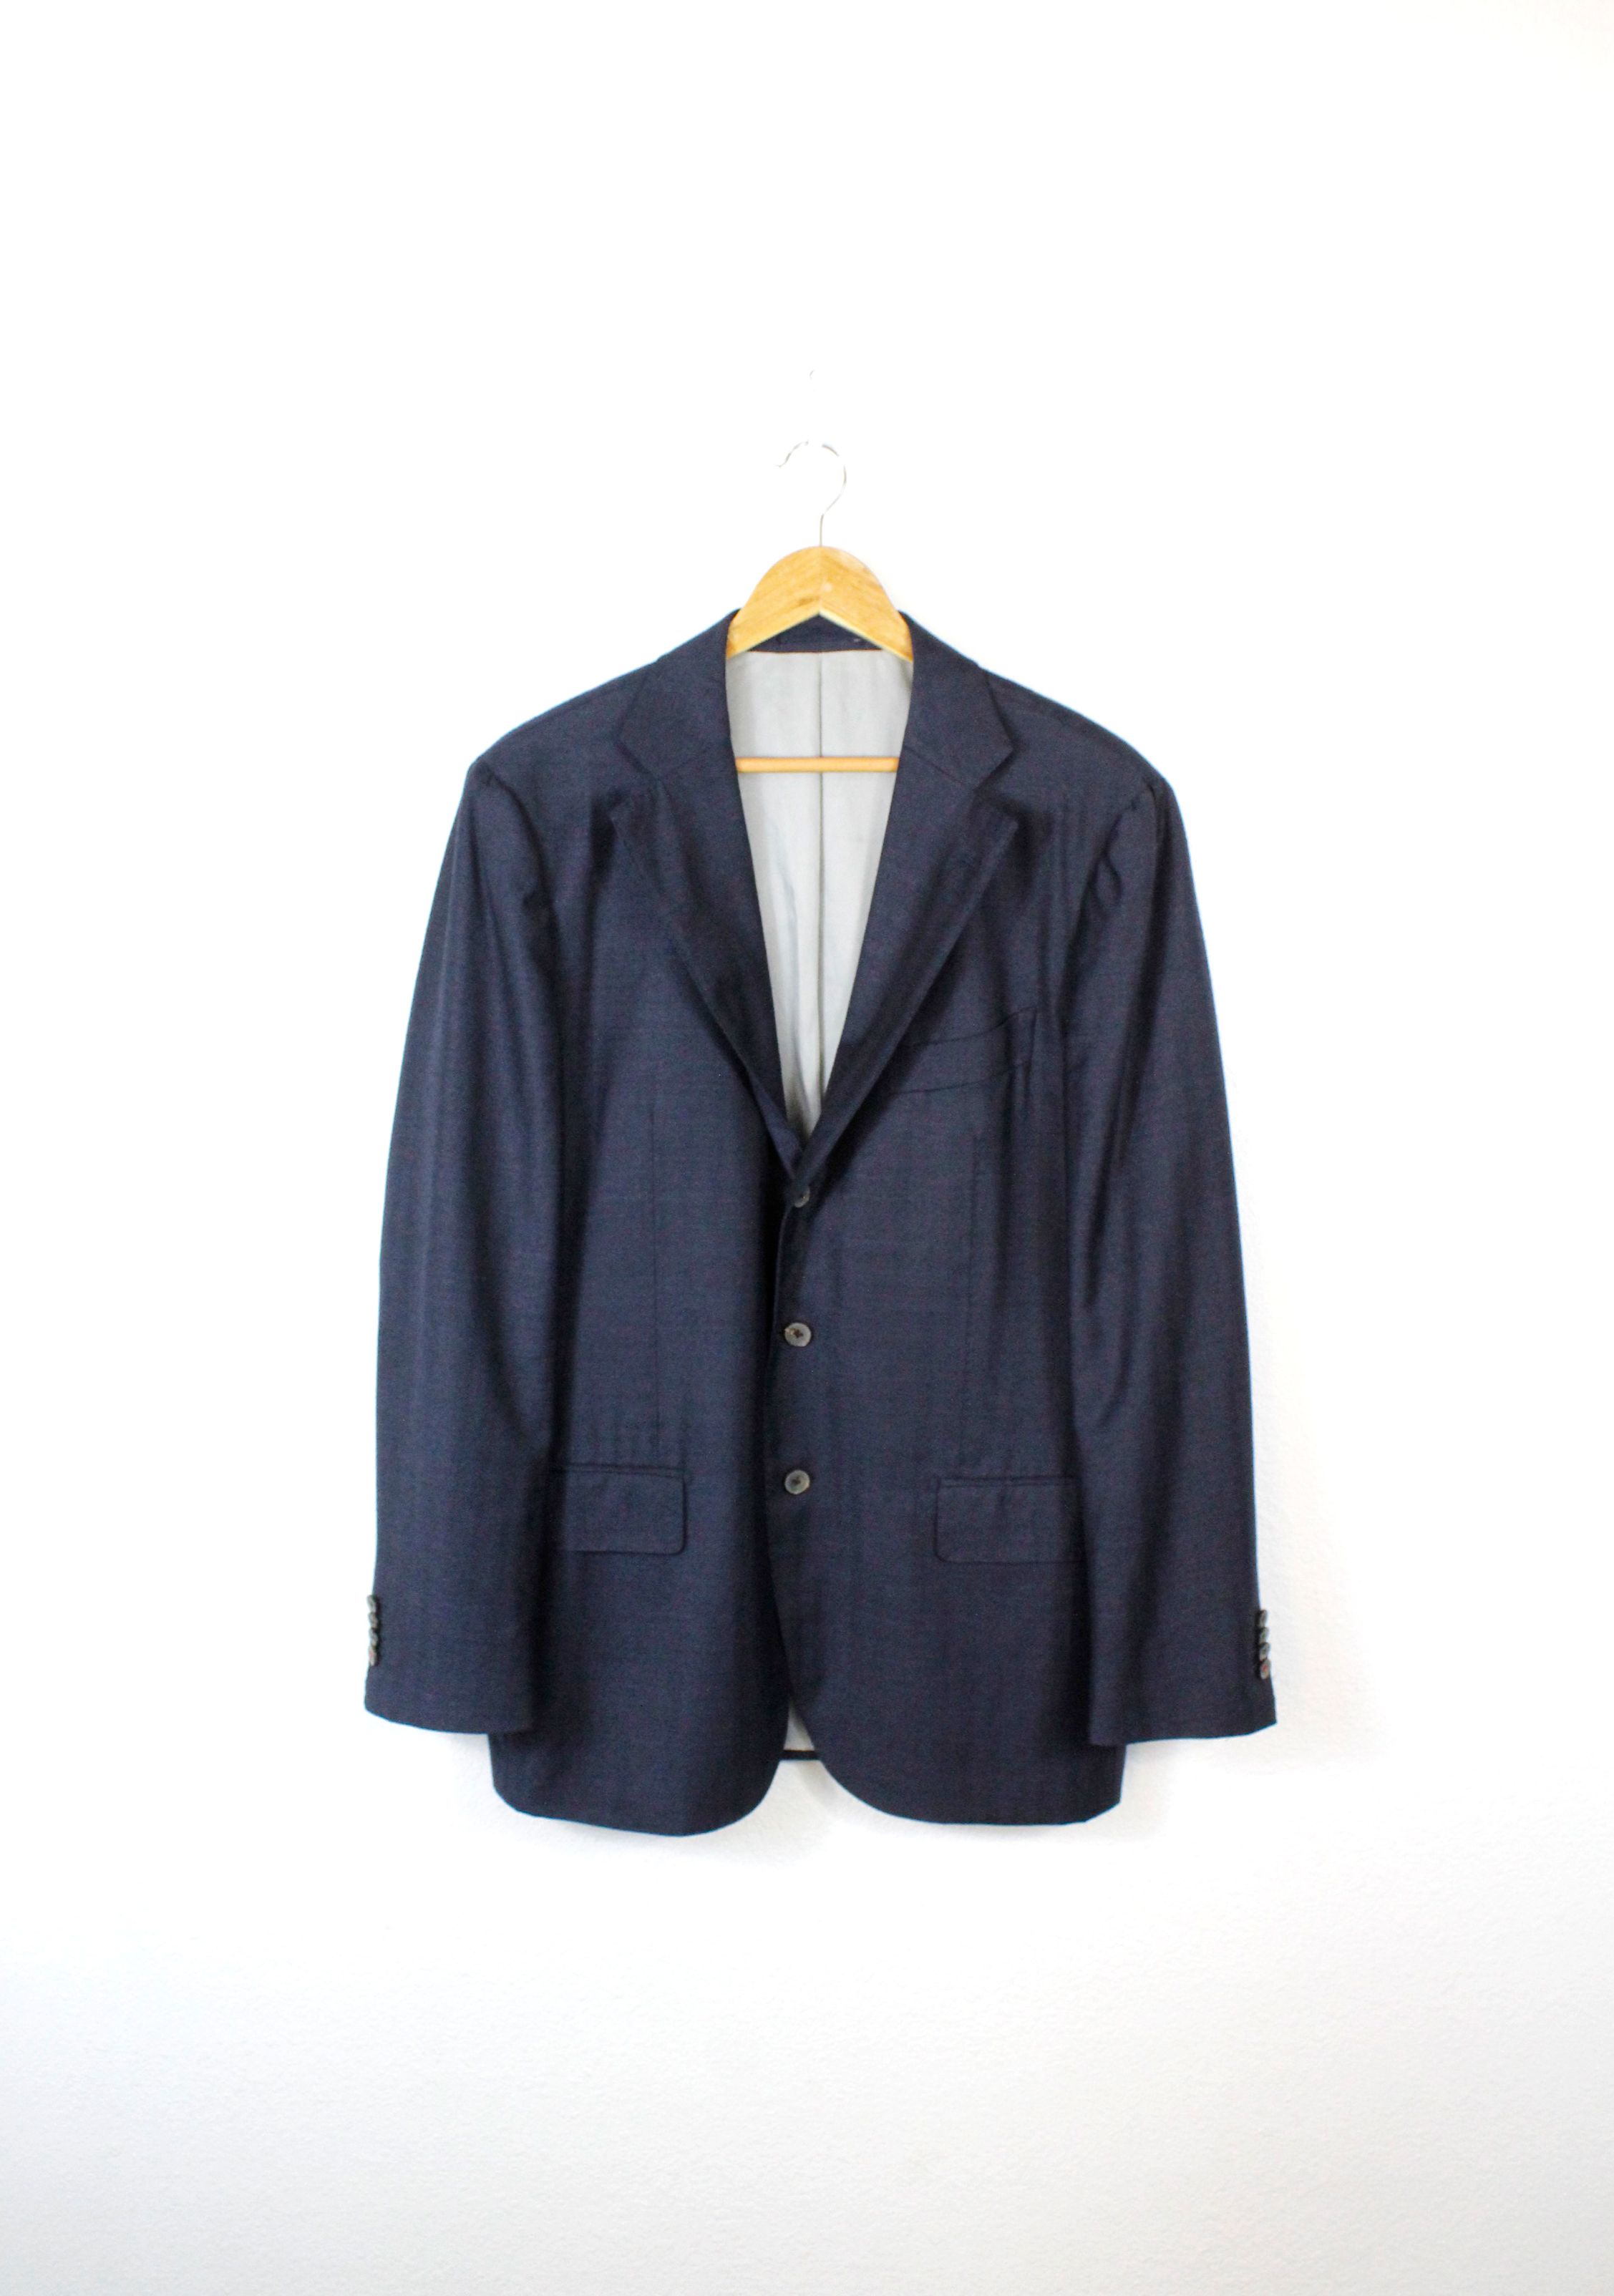 Suitsupply Suitsupply La Spalla Wool Cashmere Blazer Jacket 54 size ...